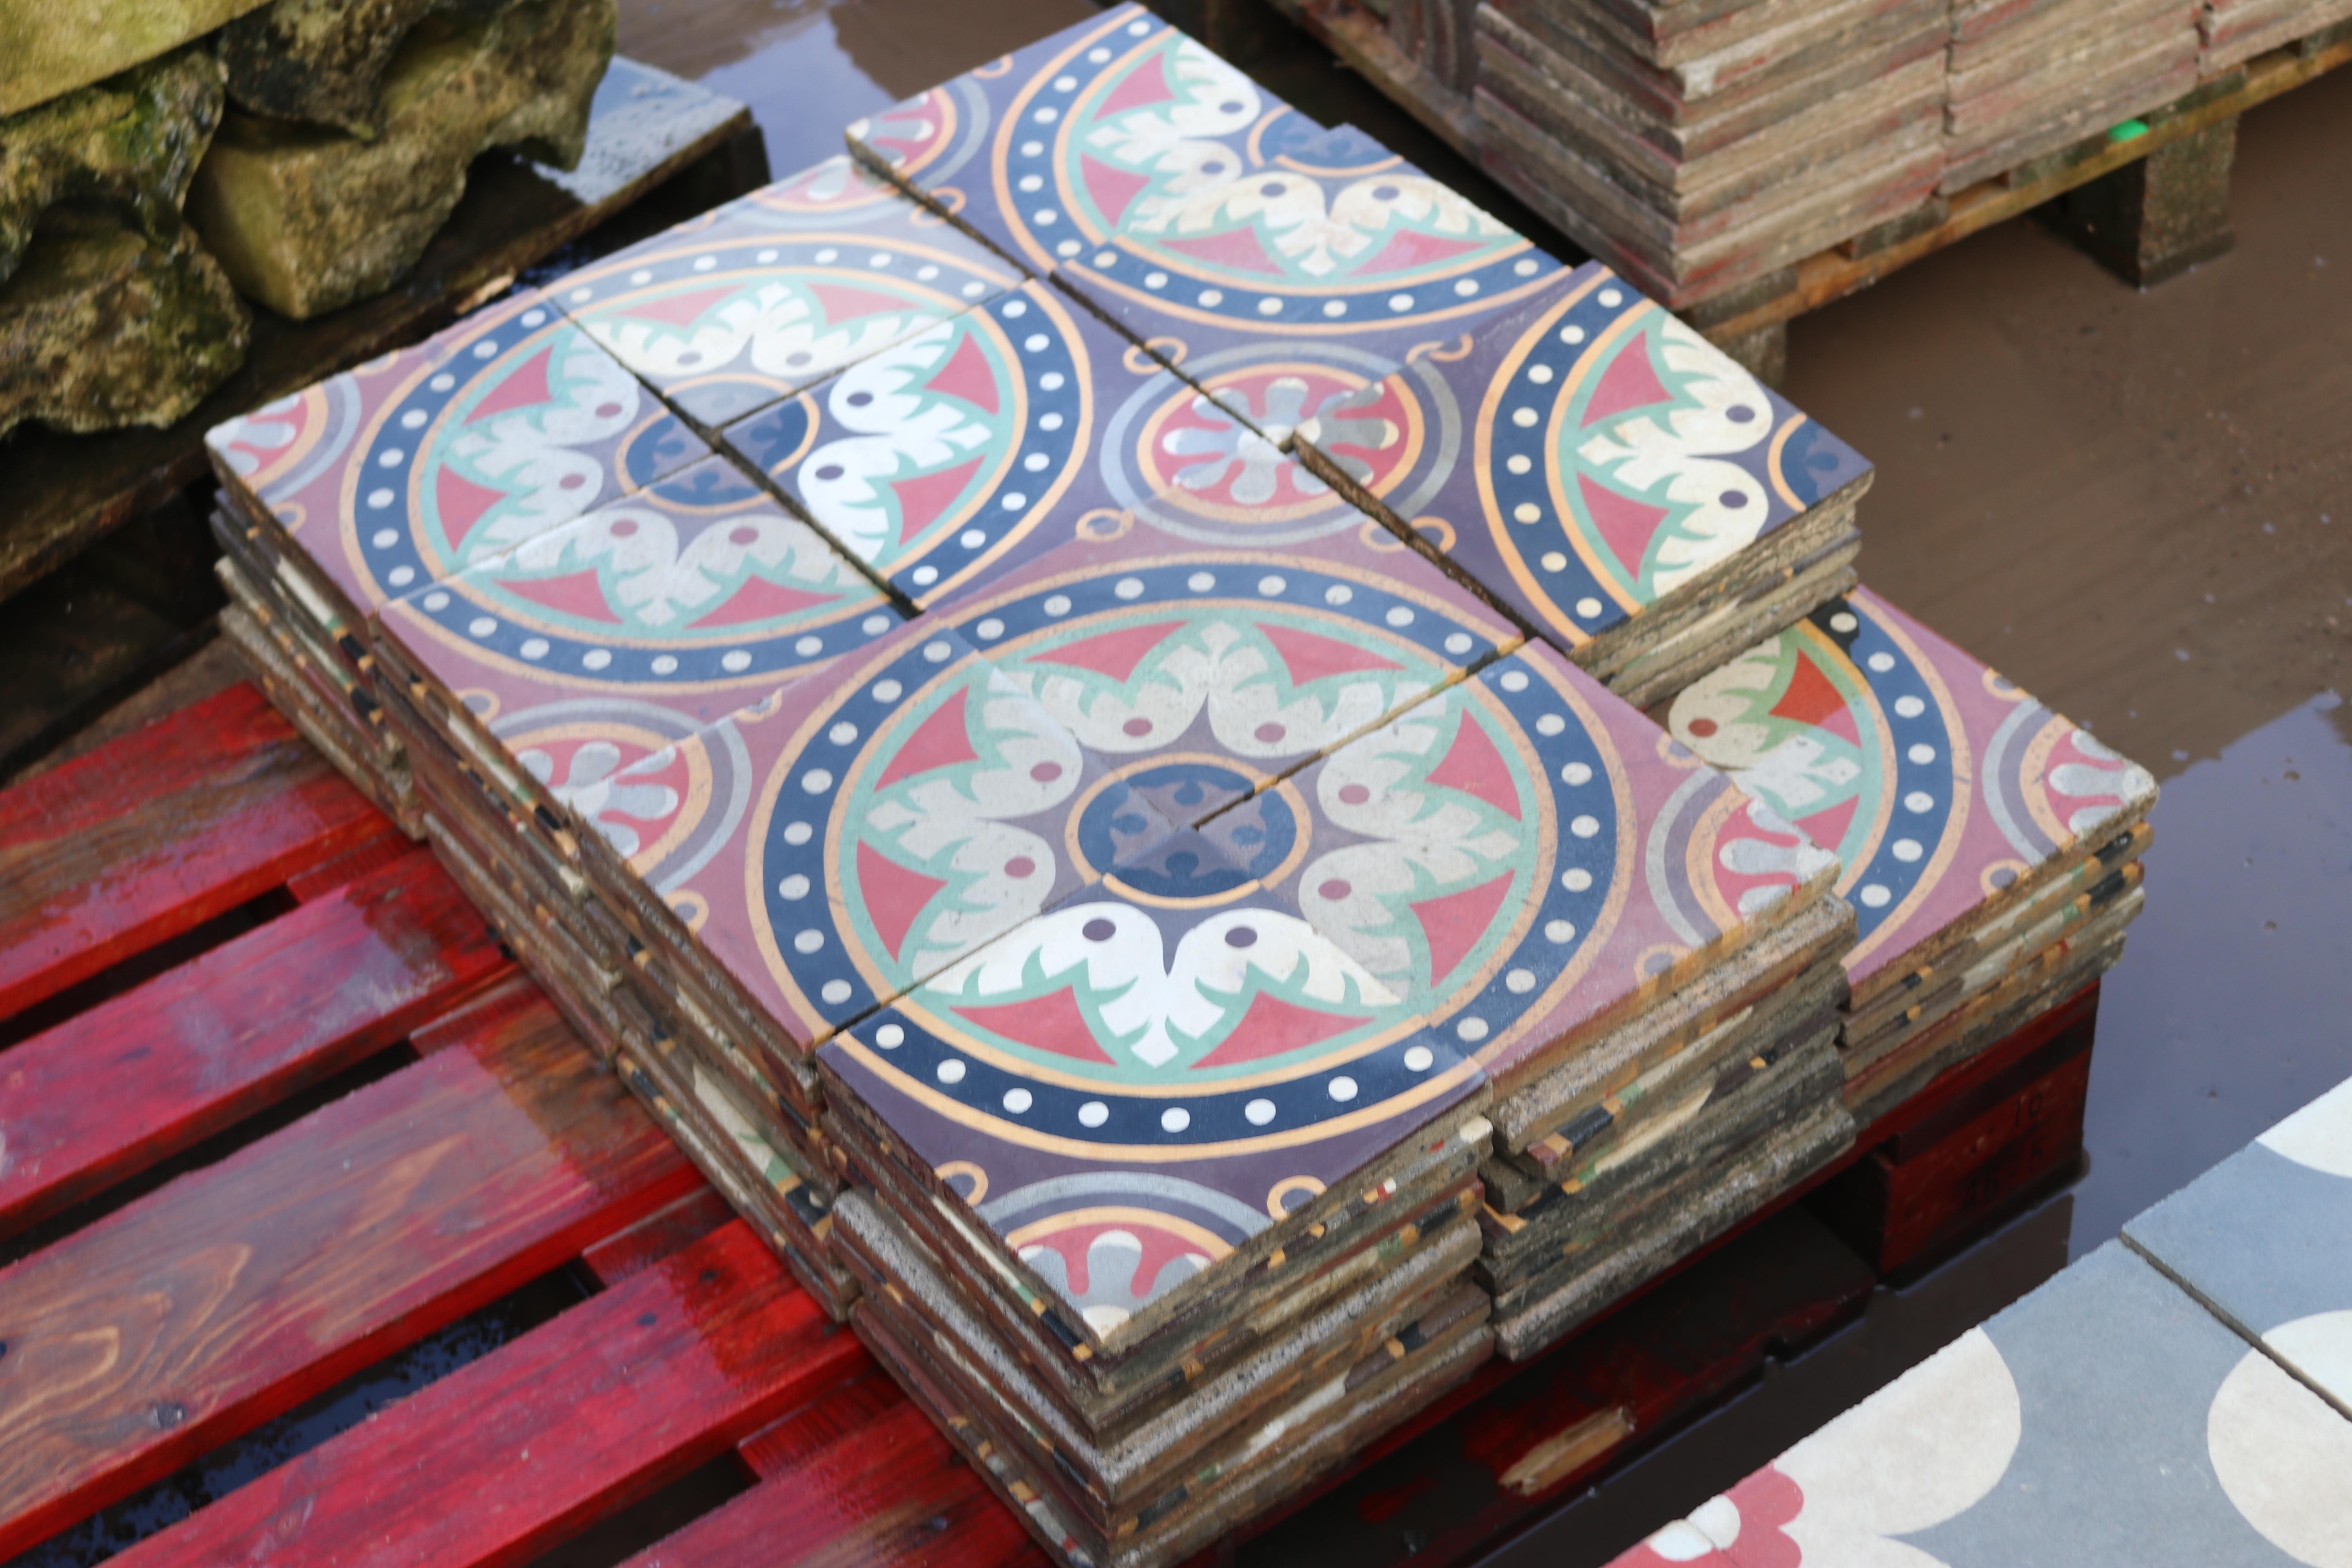 20th Century Reclaimed Encaustic Floor Tiles with Pattern